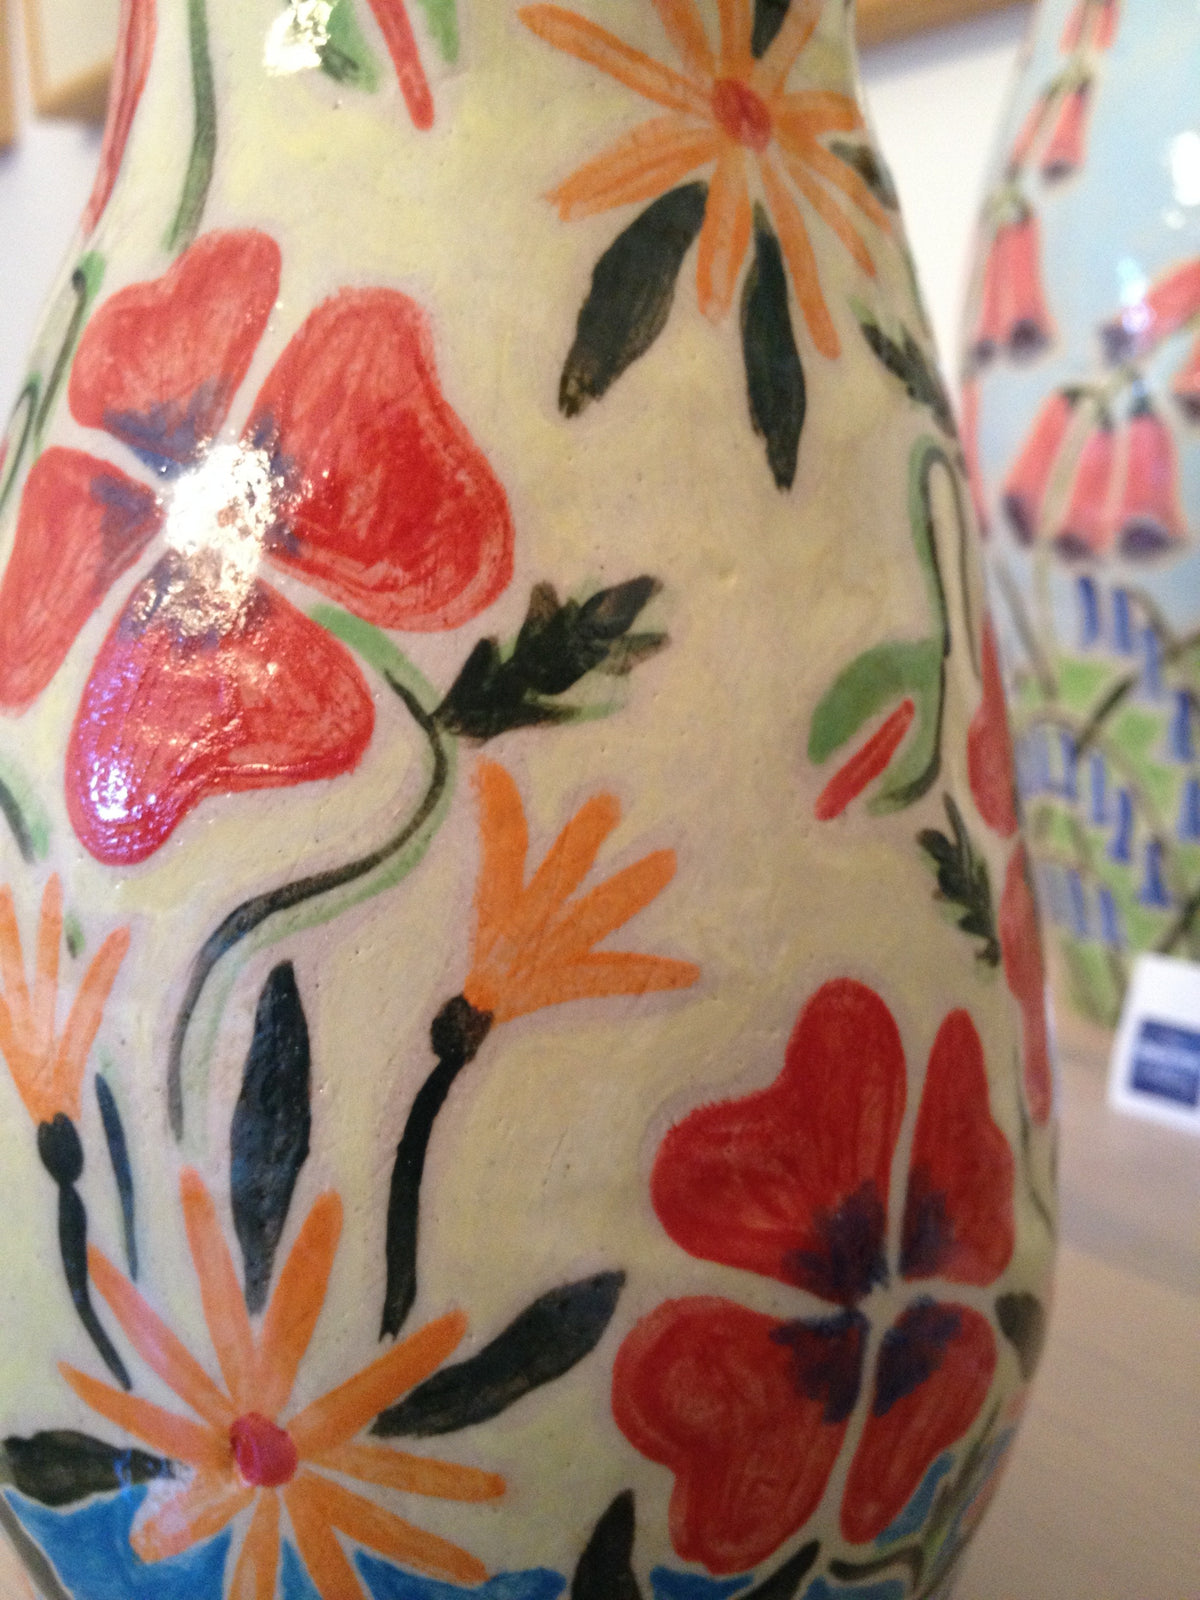 Cornish ceramic flower vase. Red Poppies and pink Daisies by Cornish artist Joanne Short